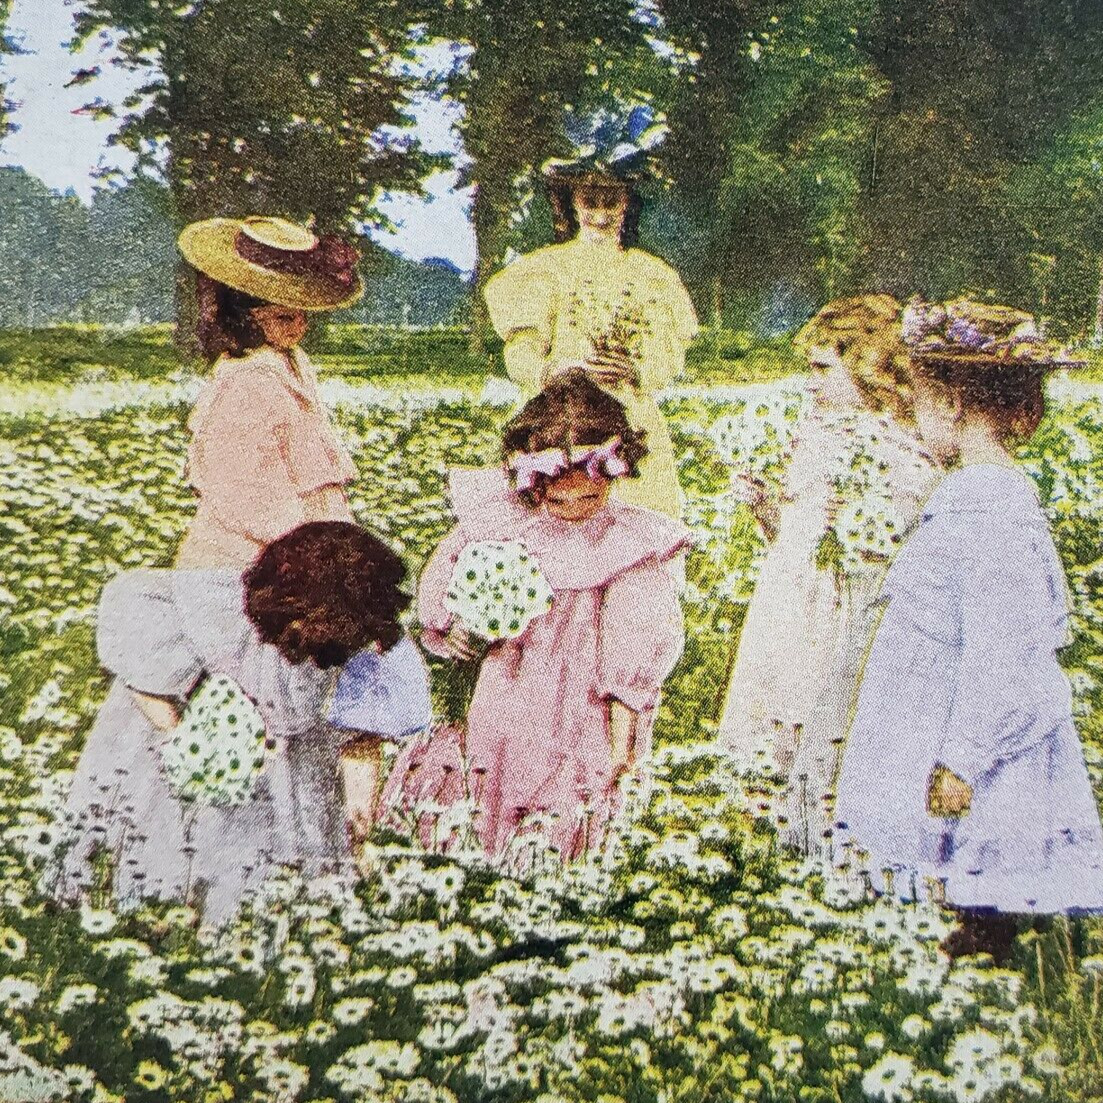 Little Girls Plucking Daisies Children With Flowers Picking Stereoview K183